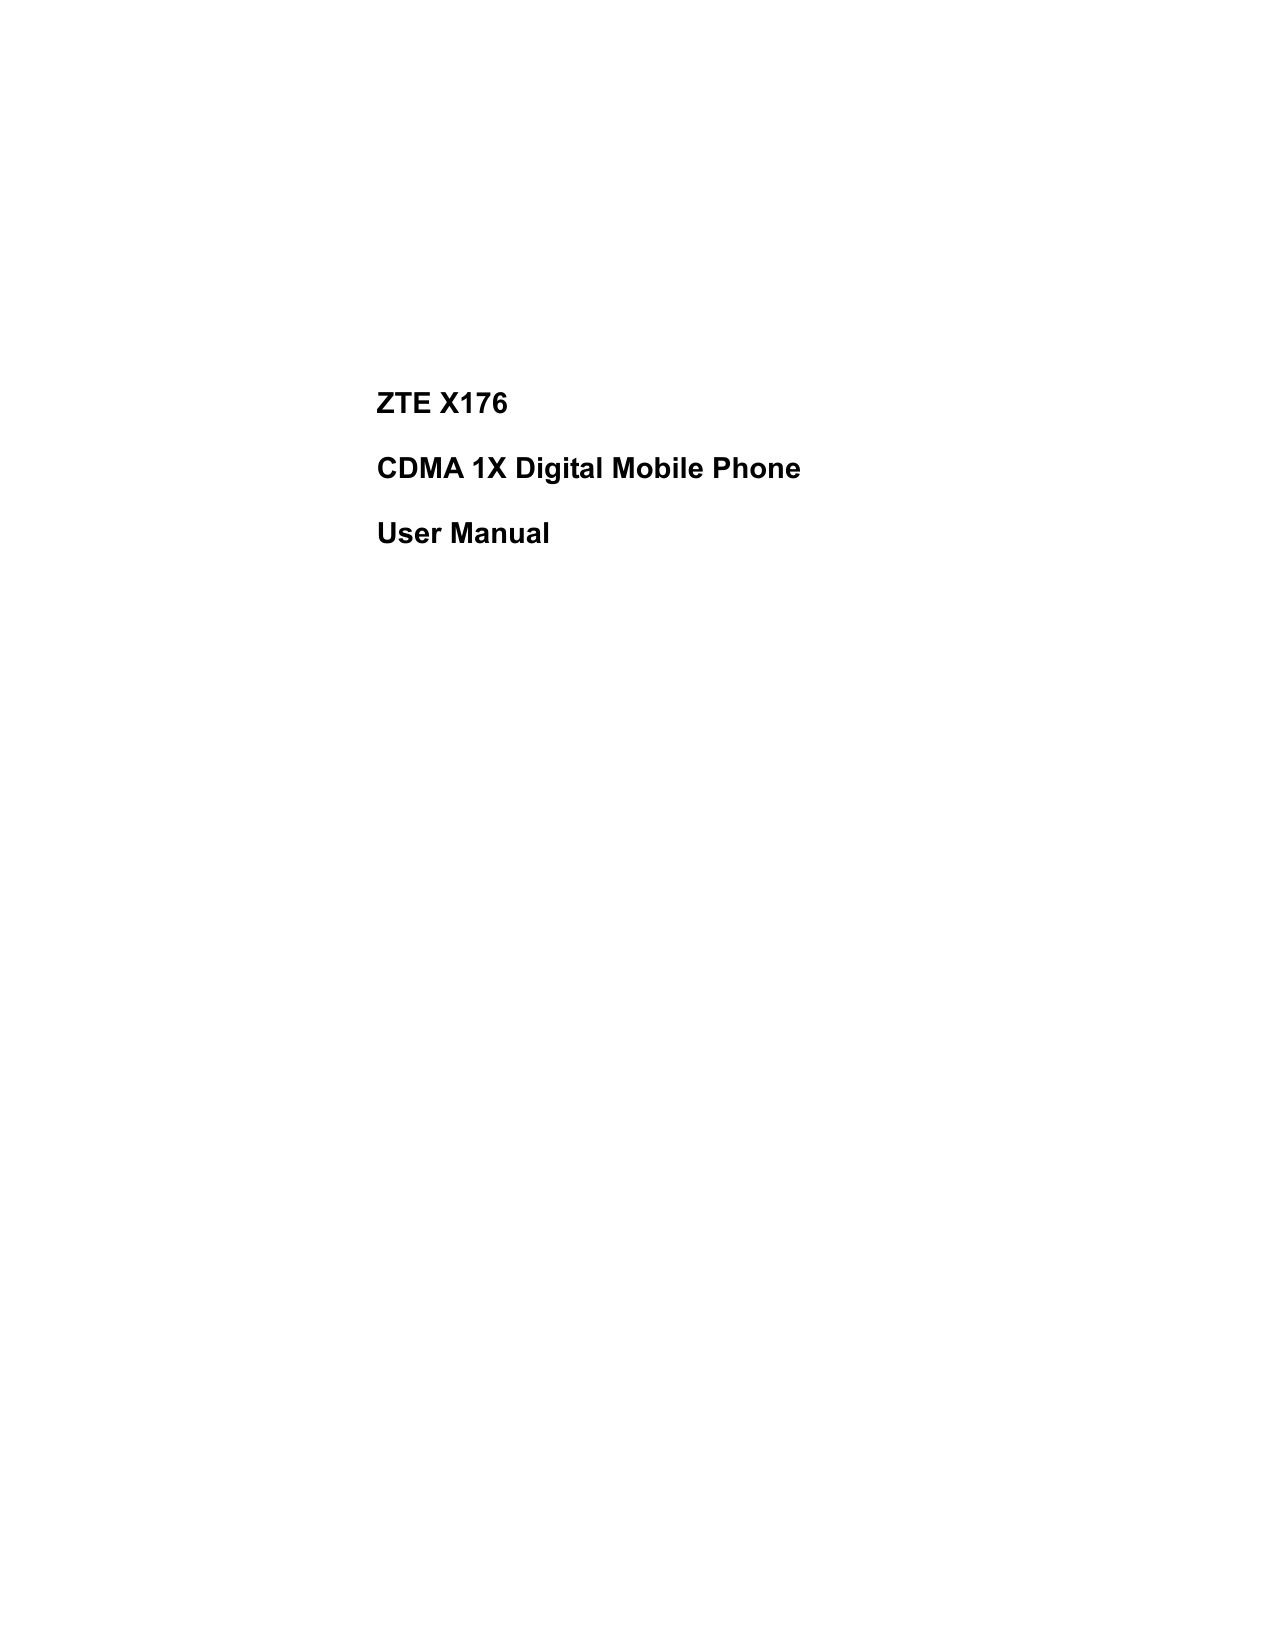      ZTE X176 CDMA 1X Digital Mobile Phone User Manual    